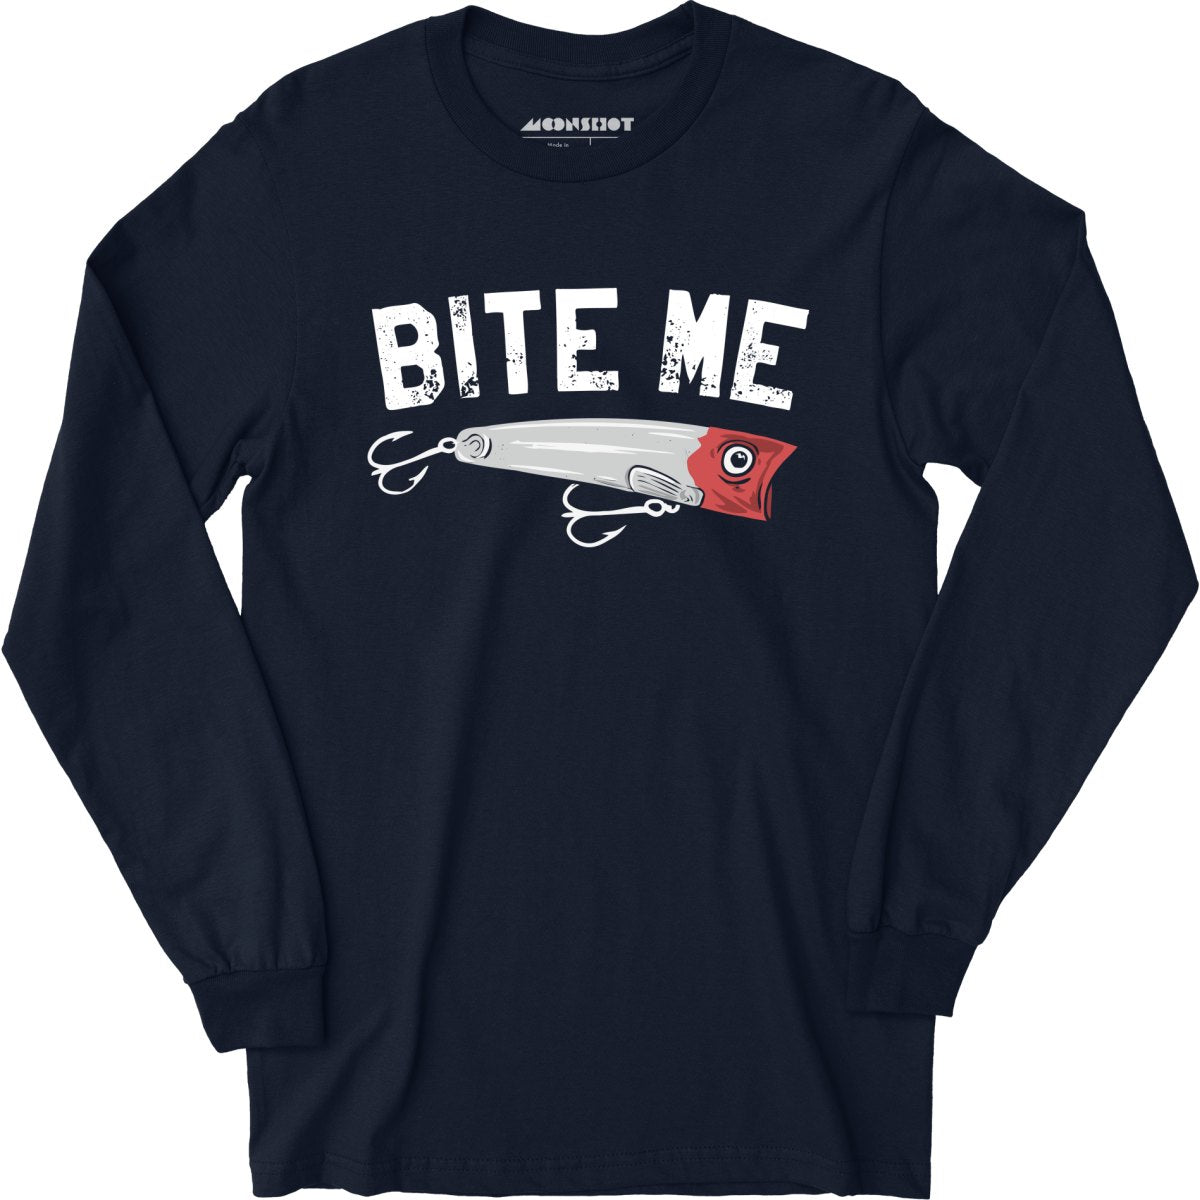 Bite Me - Long Sleeve T-Shirt